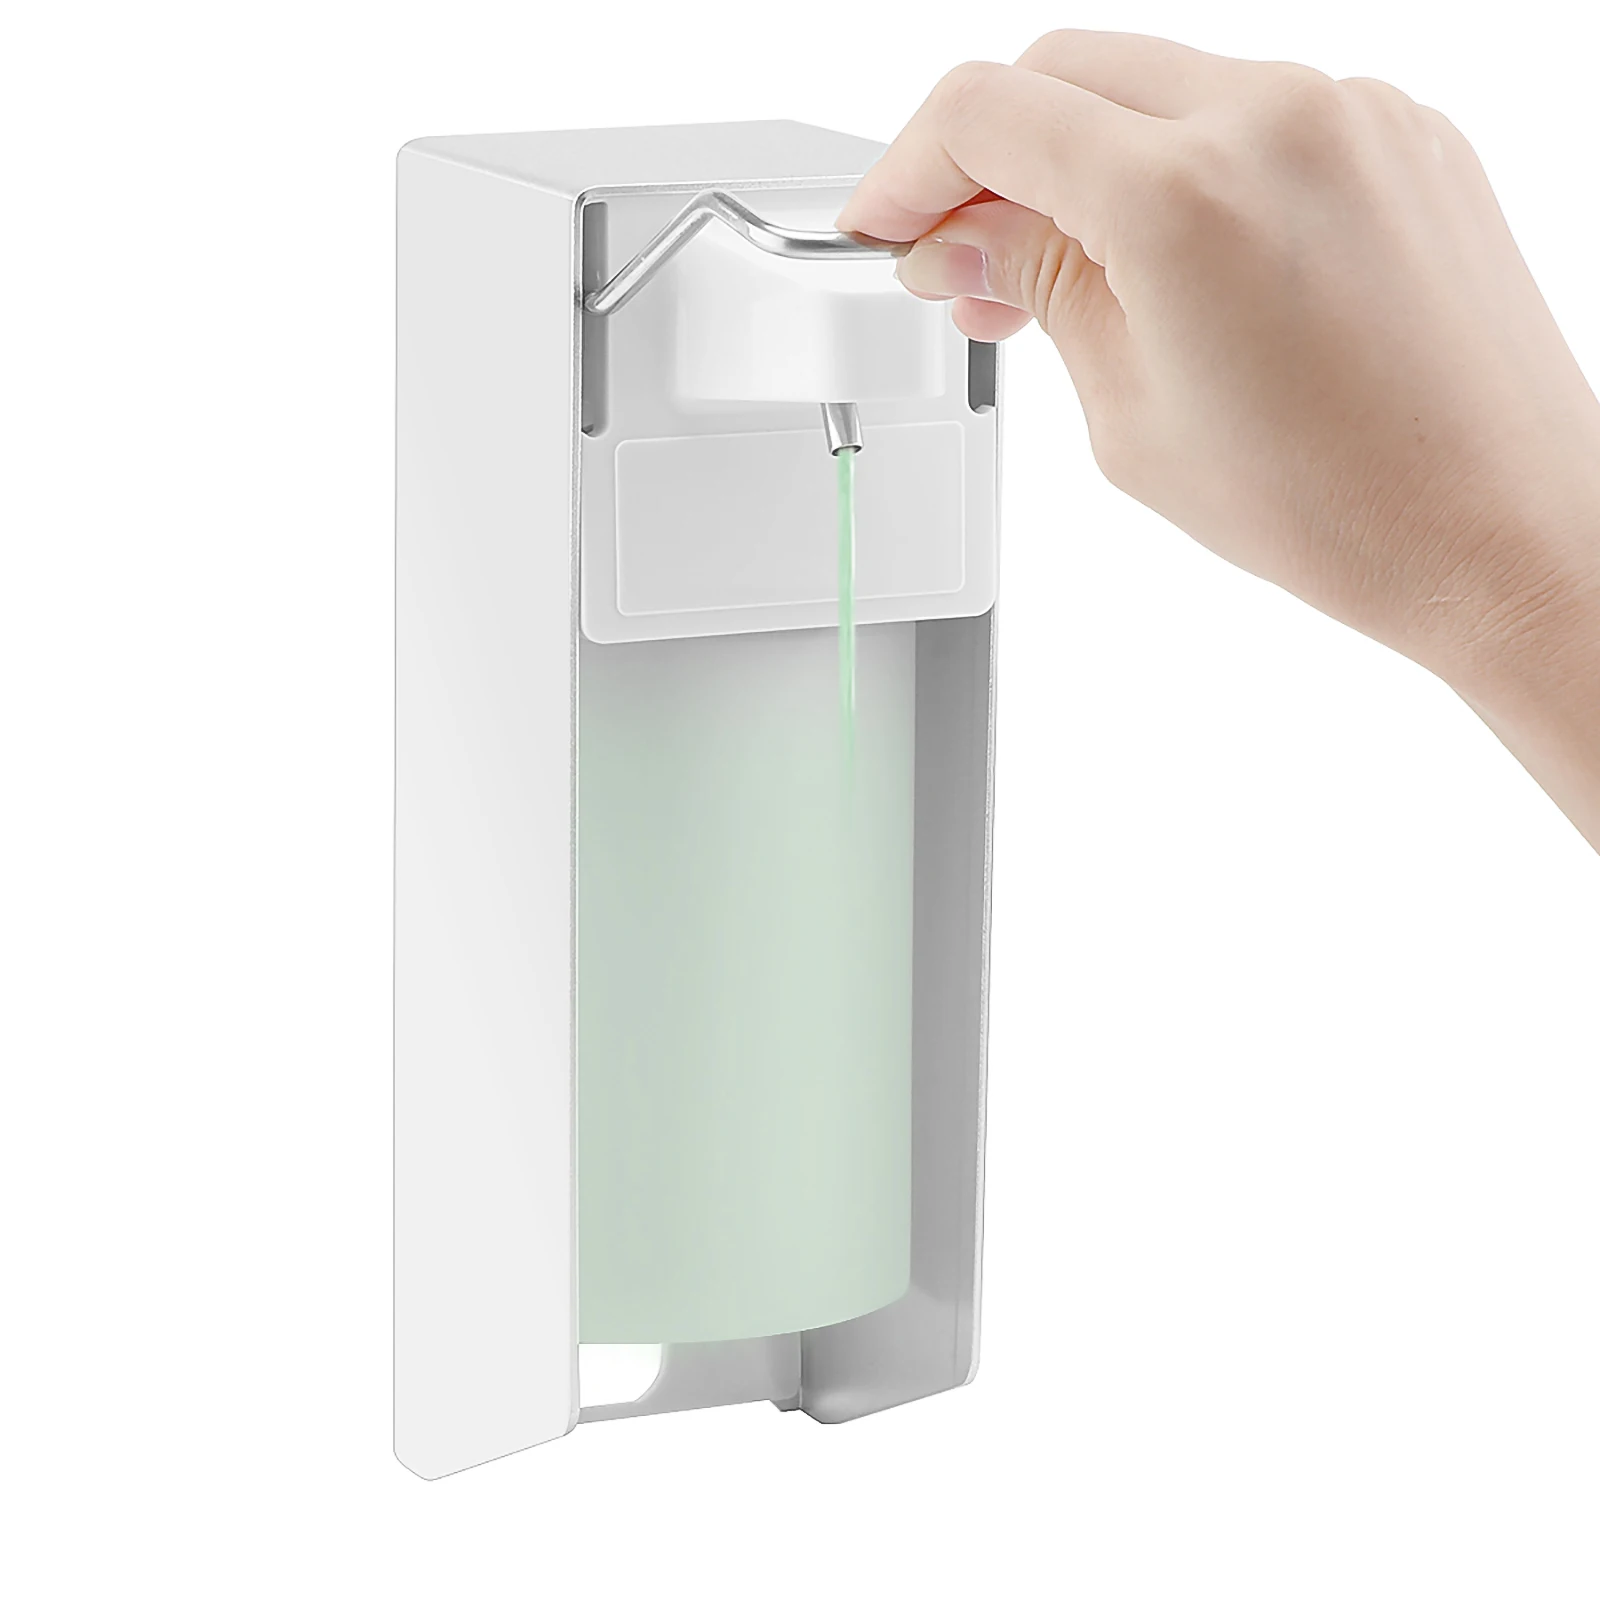 

400ml Automatic Soap Dispenser Touchless Sensor Hand Sanitizer Shampoo Detergent Dispenser Wall Mounted For Bathroom Kitchen